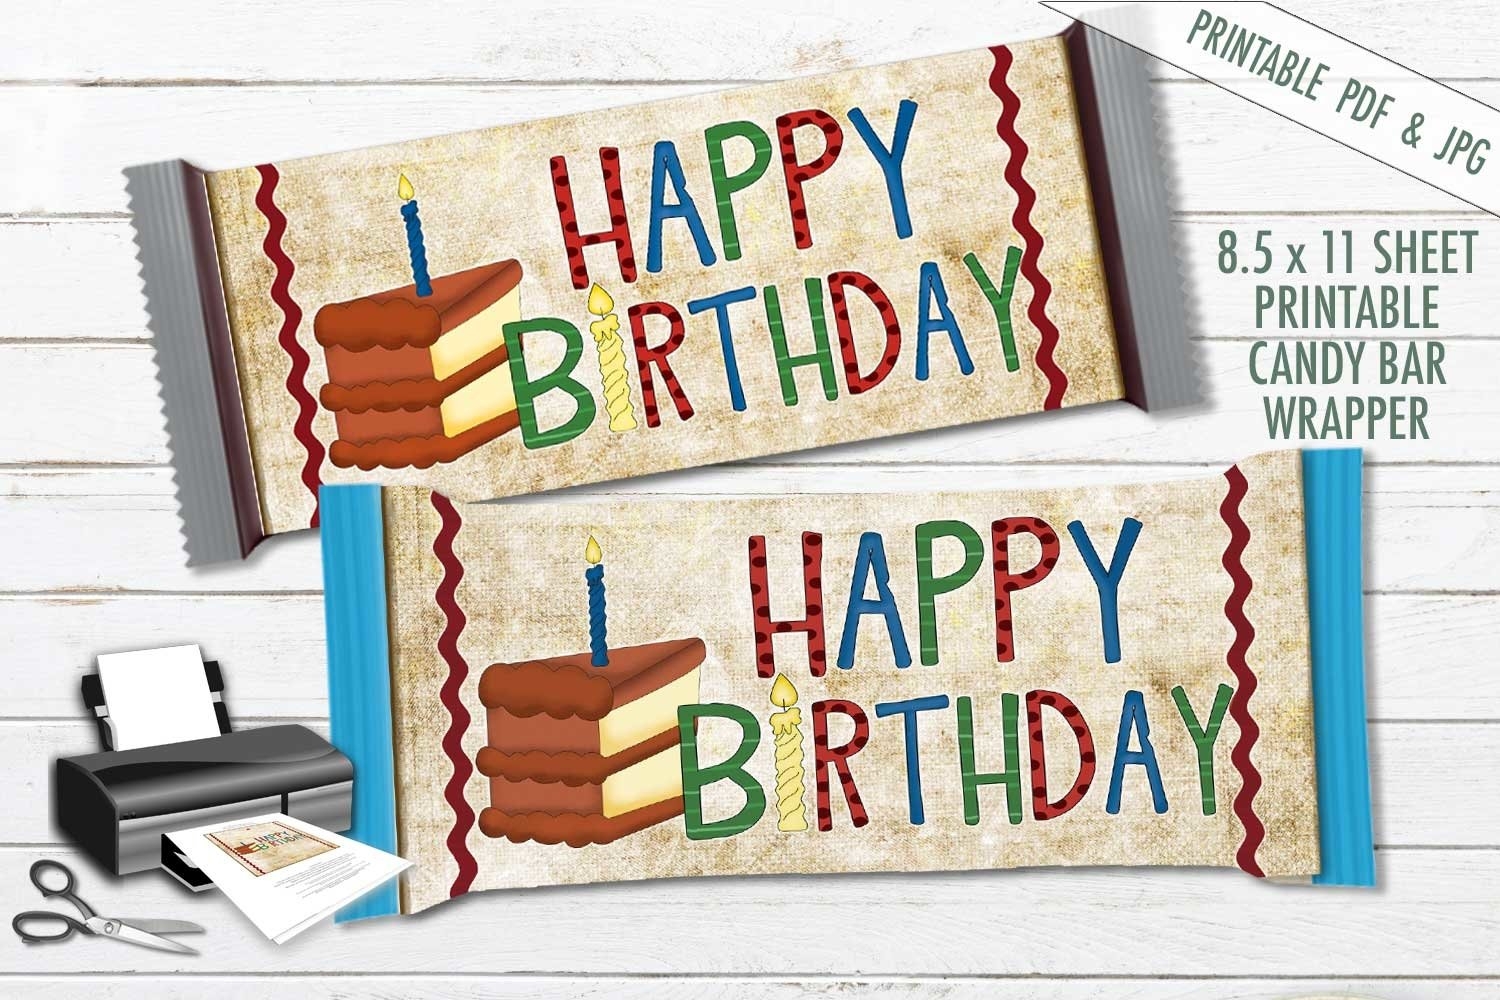 Happy Birthday Candy Bar Wrapper Hershey Wrapper PDF JPG - Free Printable Birthday Candy Bar Wrappers